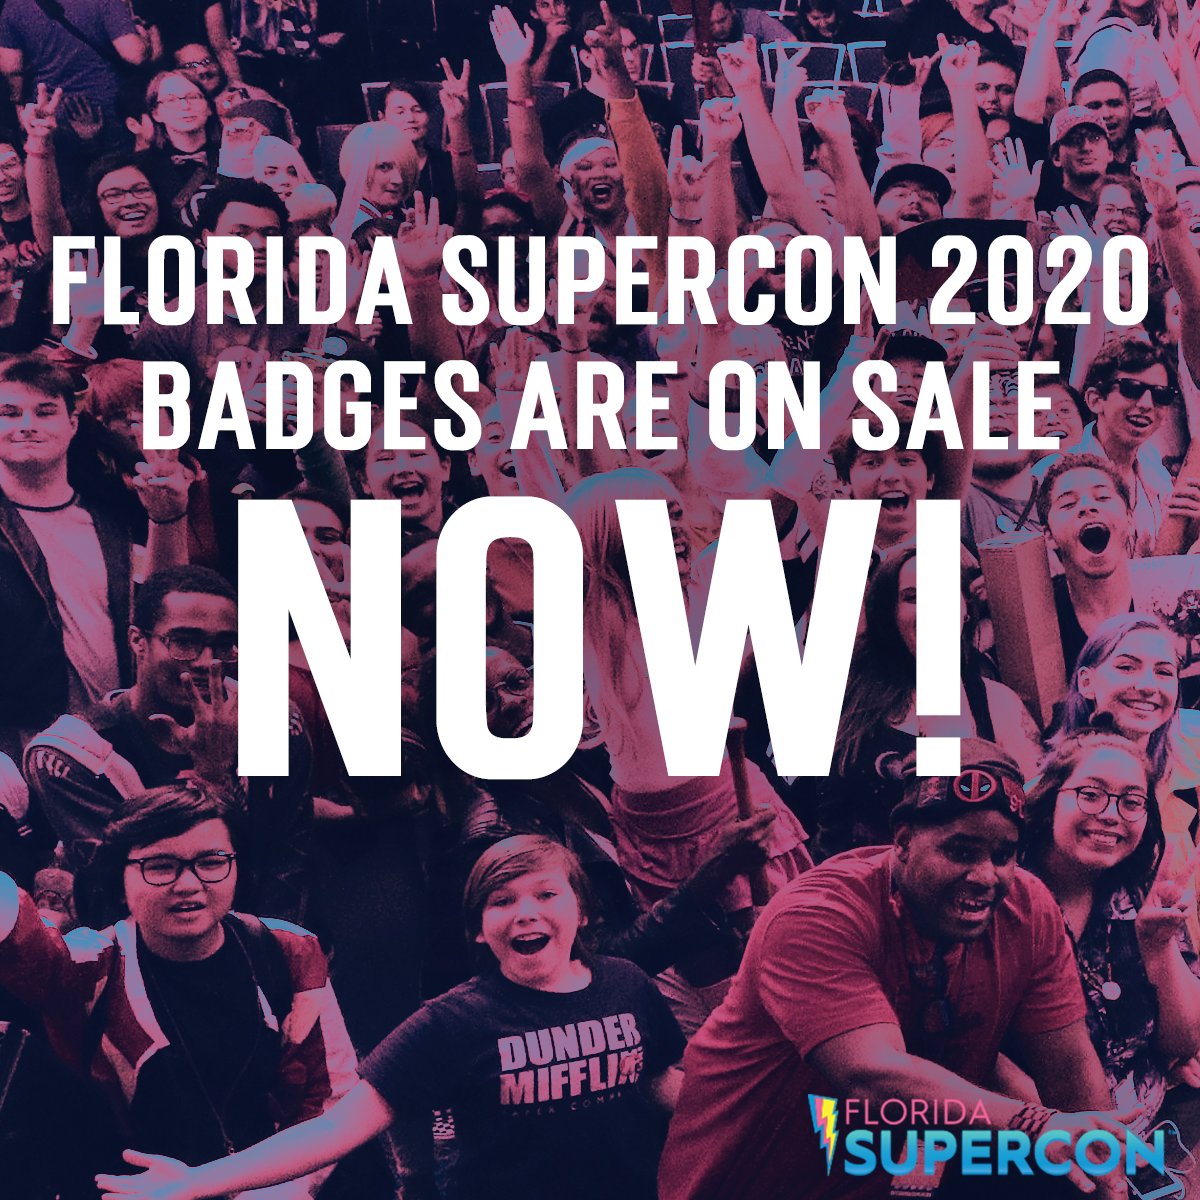 Florida Supercon Floridasupercon Twitter